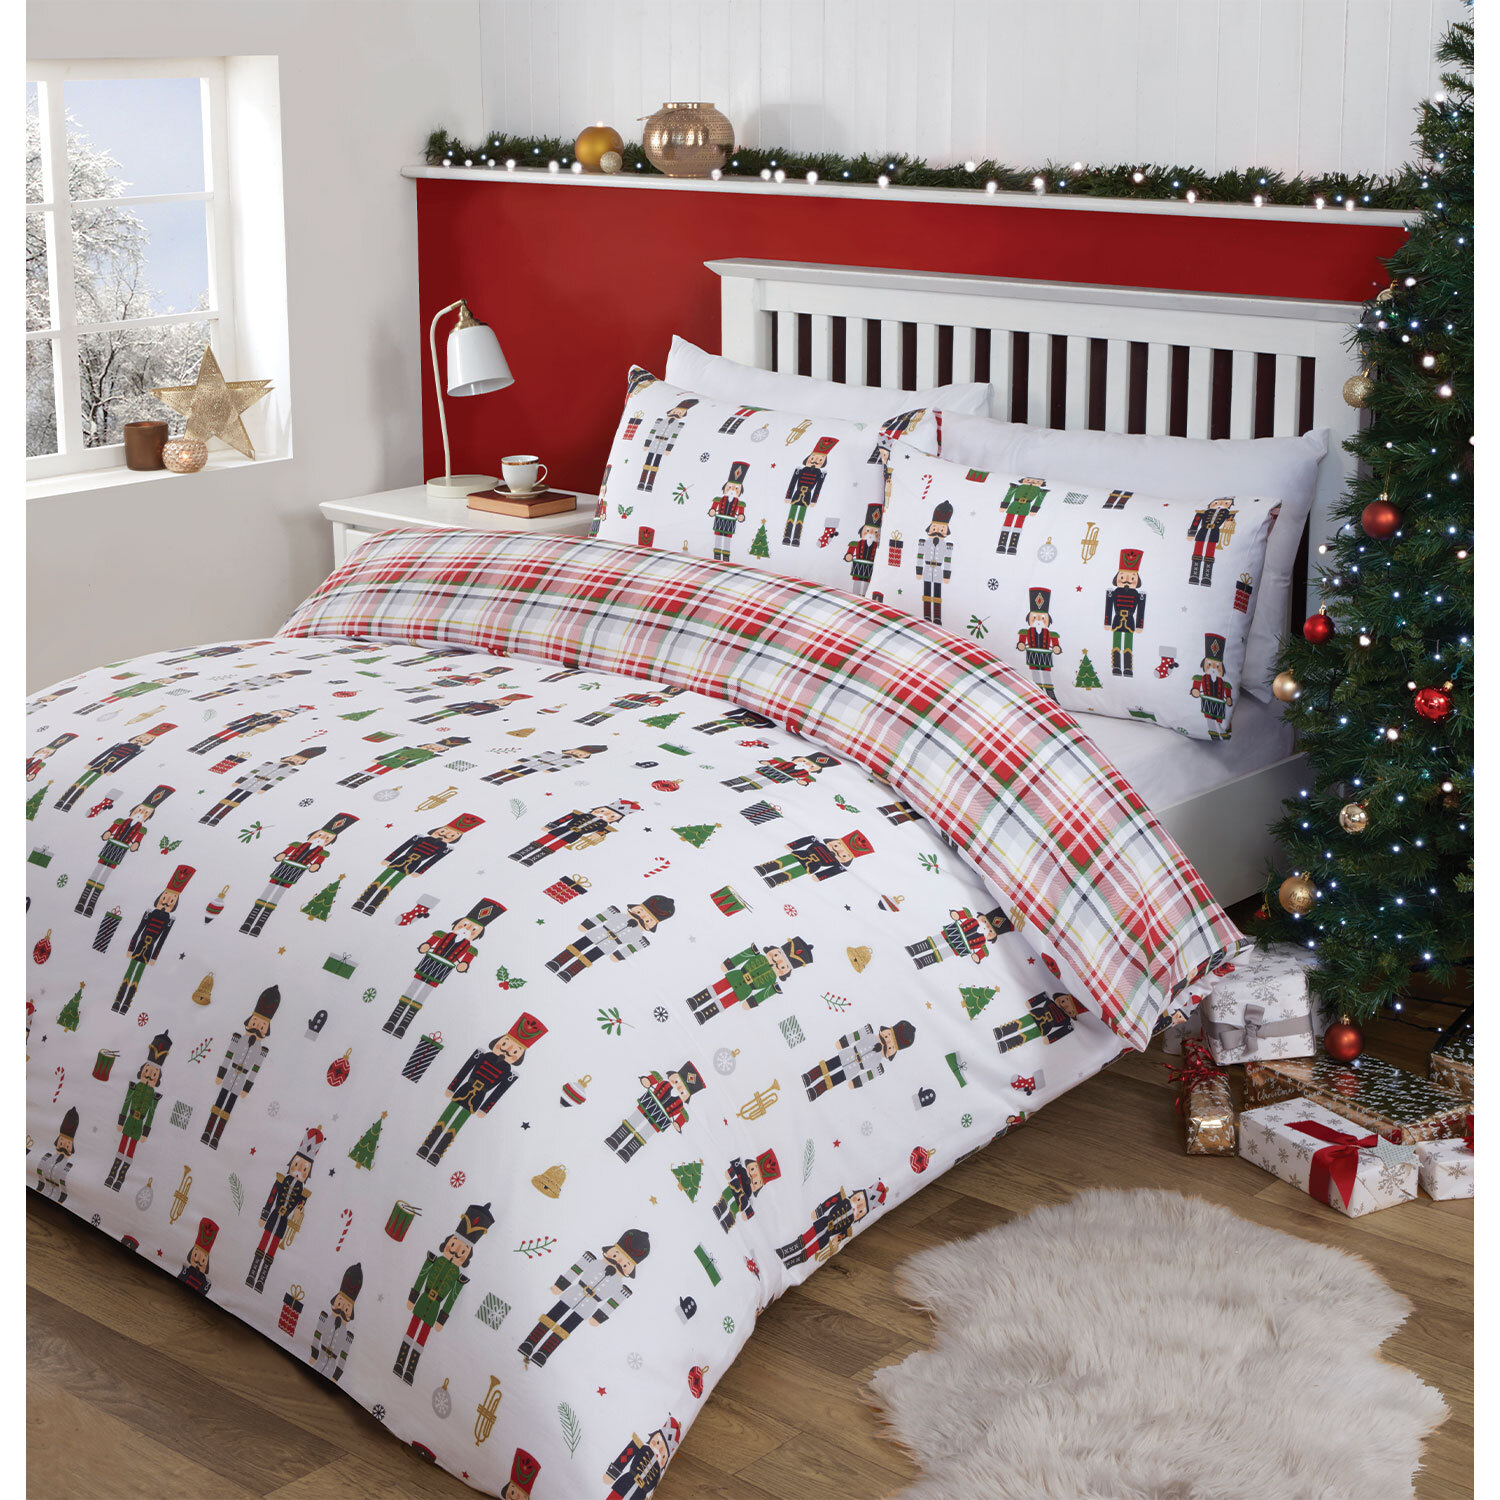 Christmas Nutcrackers Single Duvet Cover and Pillowcase Set Image 1